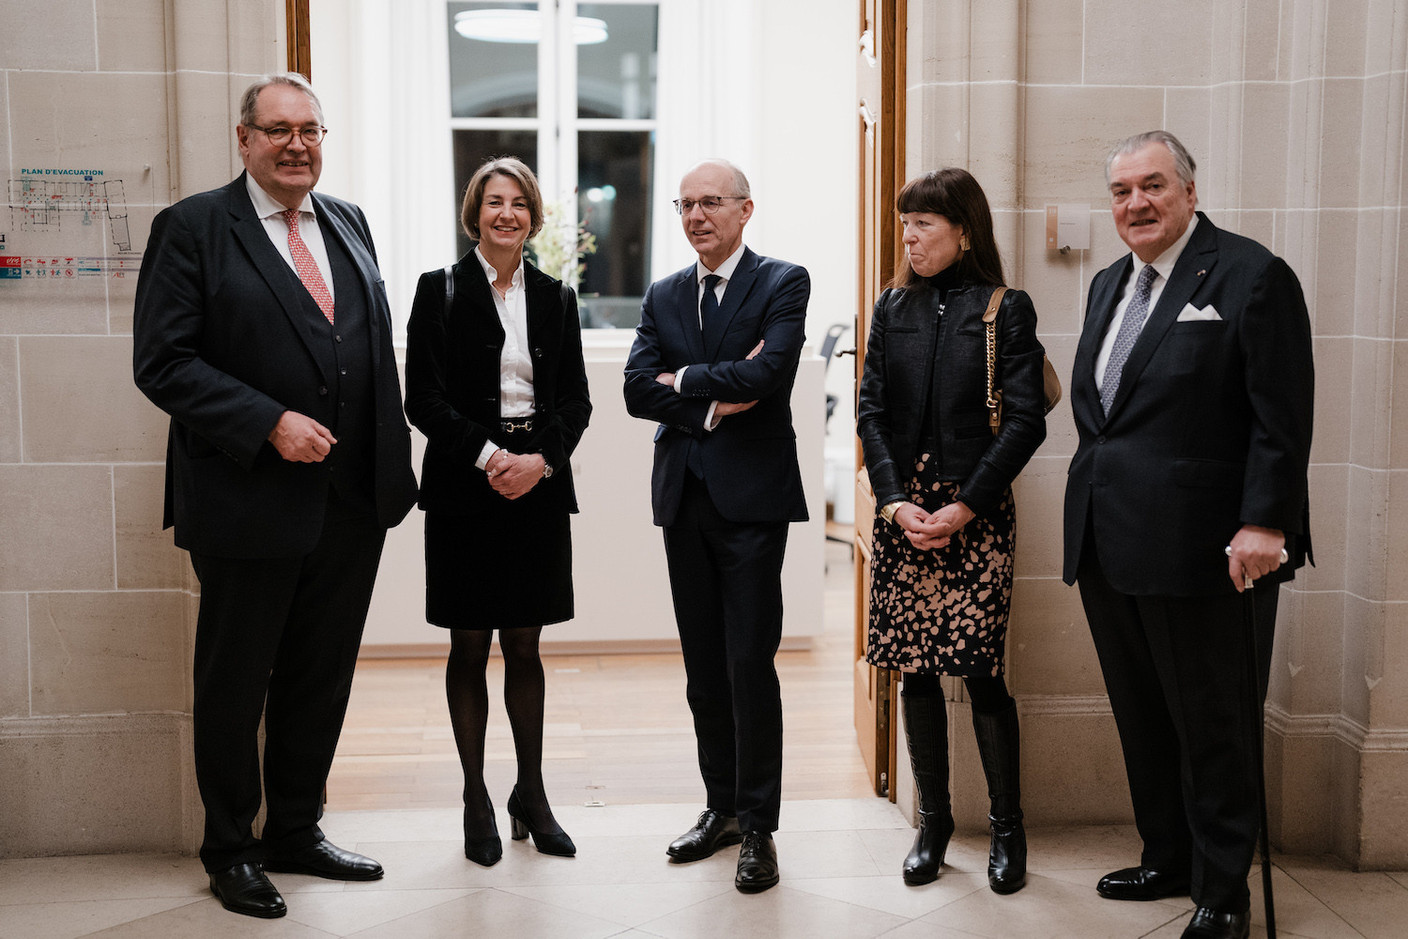 Camille Fohl, Tonika Hirdman, Luc Frieden, Françoise Thoma, Henri Grethen. (Photo: Marion Dessard/Fondation de Luxembourg)